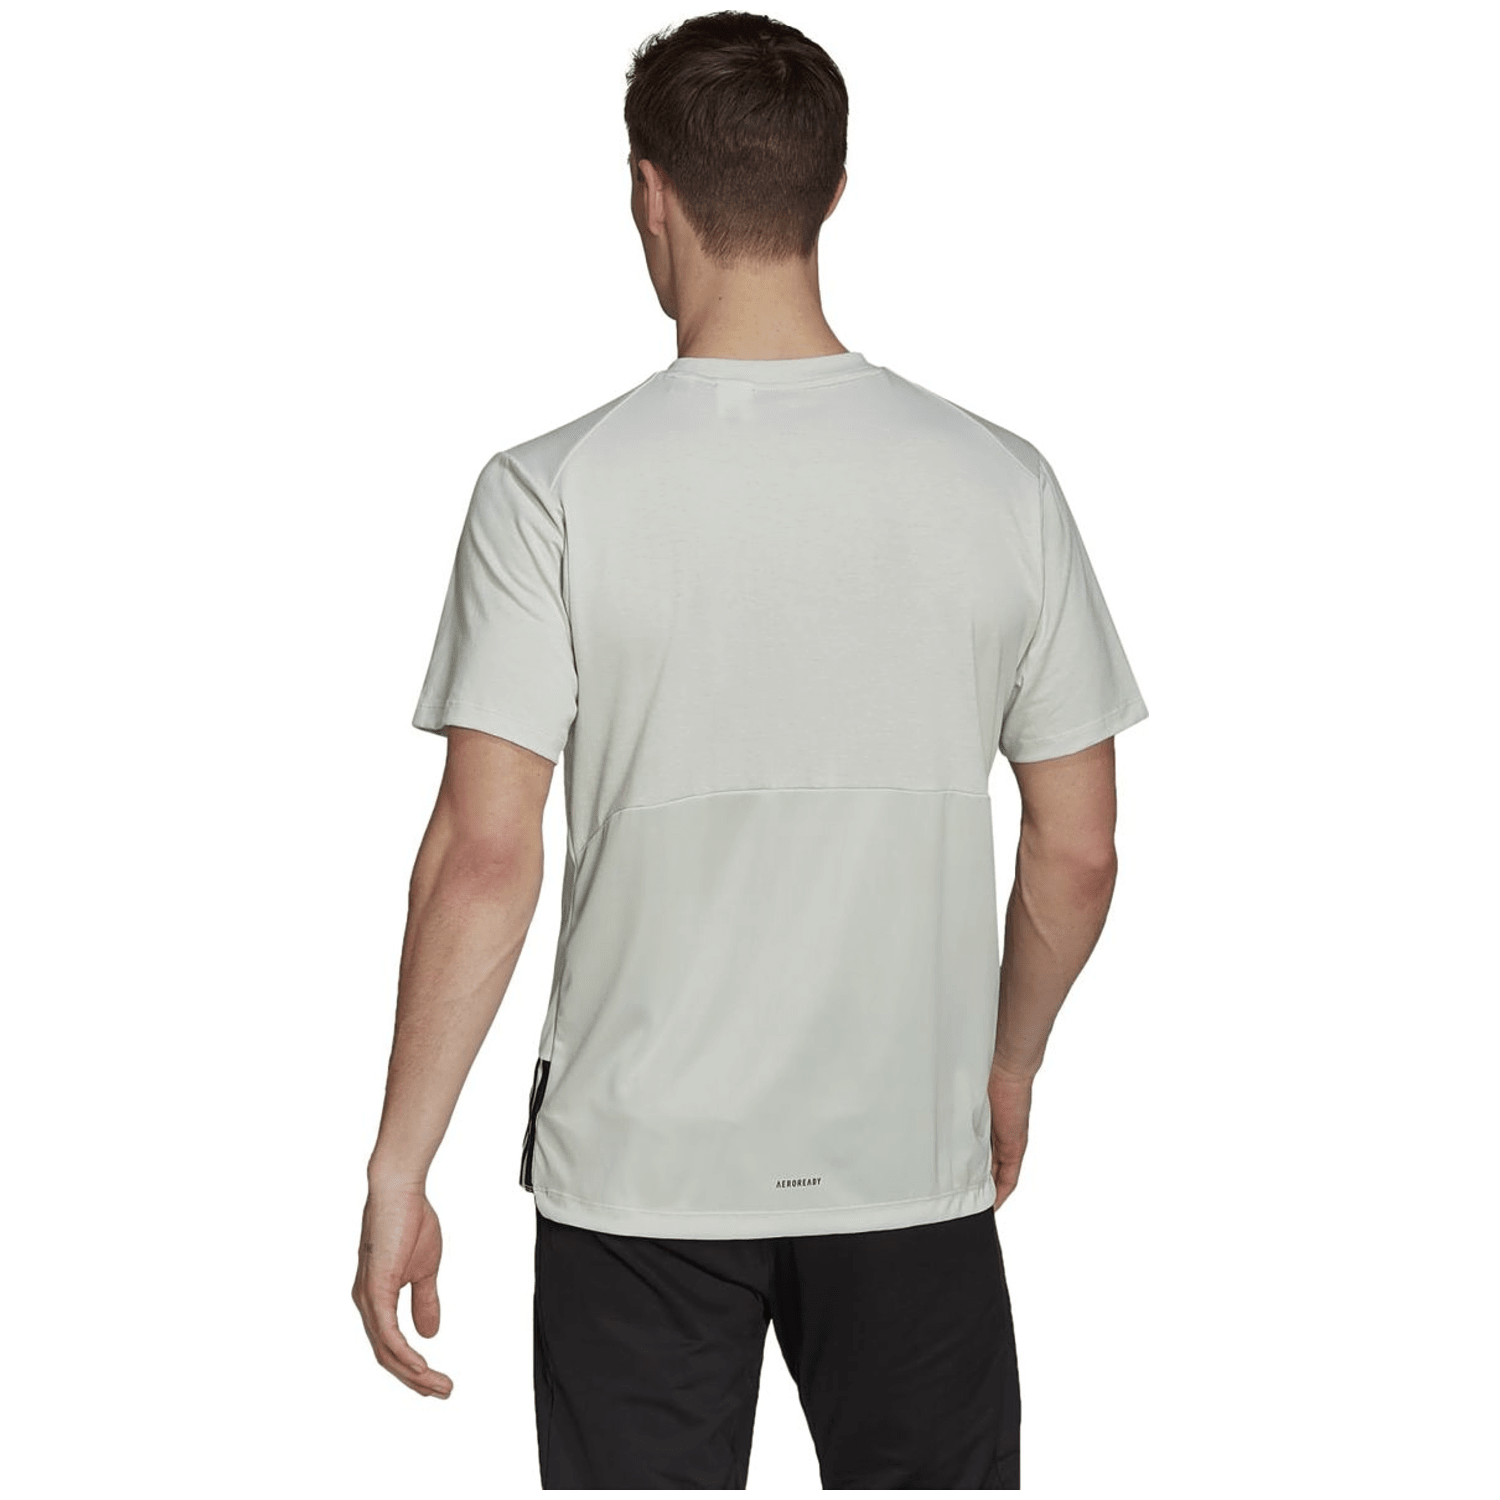 Adidas AEROREADY Yoga T-Shirt Herren